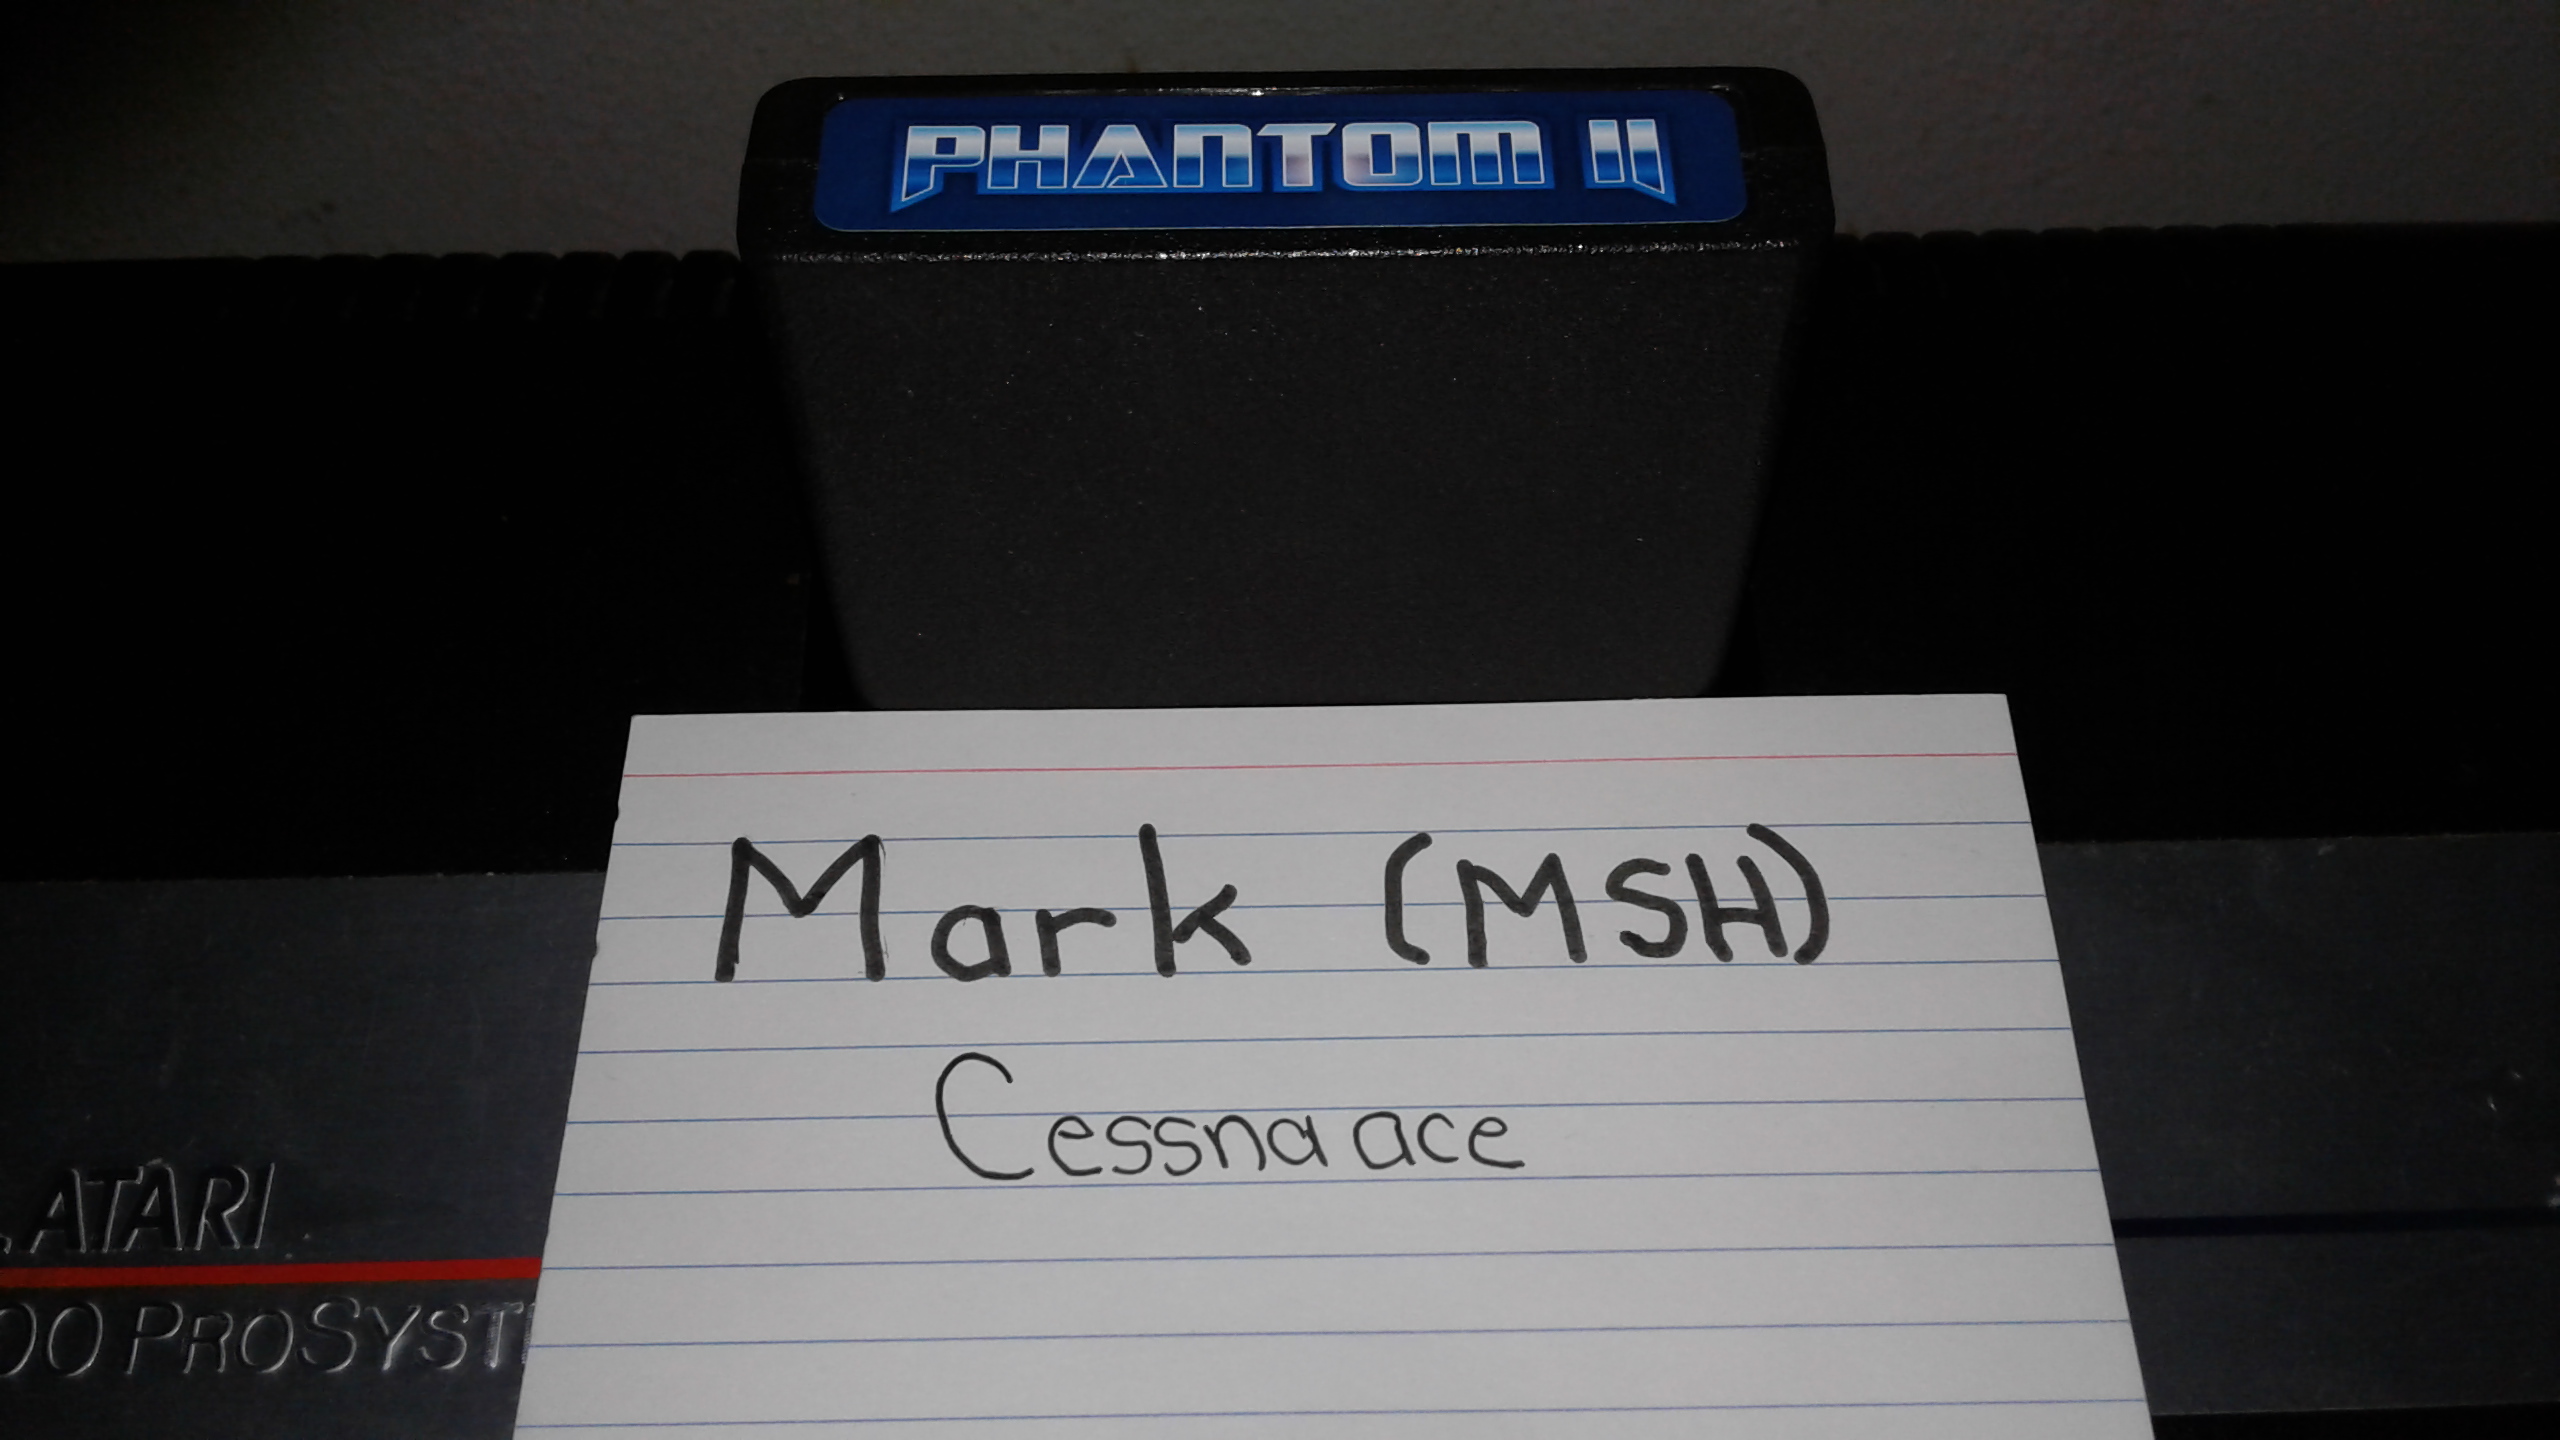 Mark: Phantom II (Atari 2600 Expert/A) 11 points on 2019-05-10 23:06:54